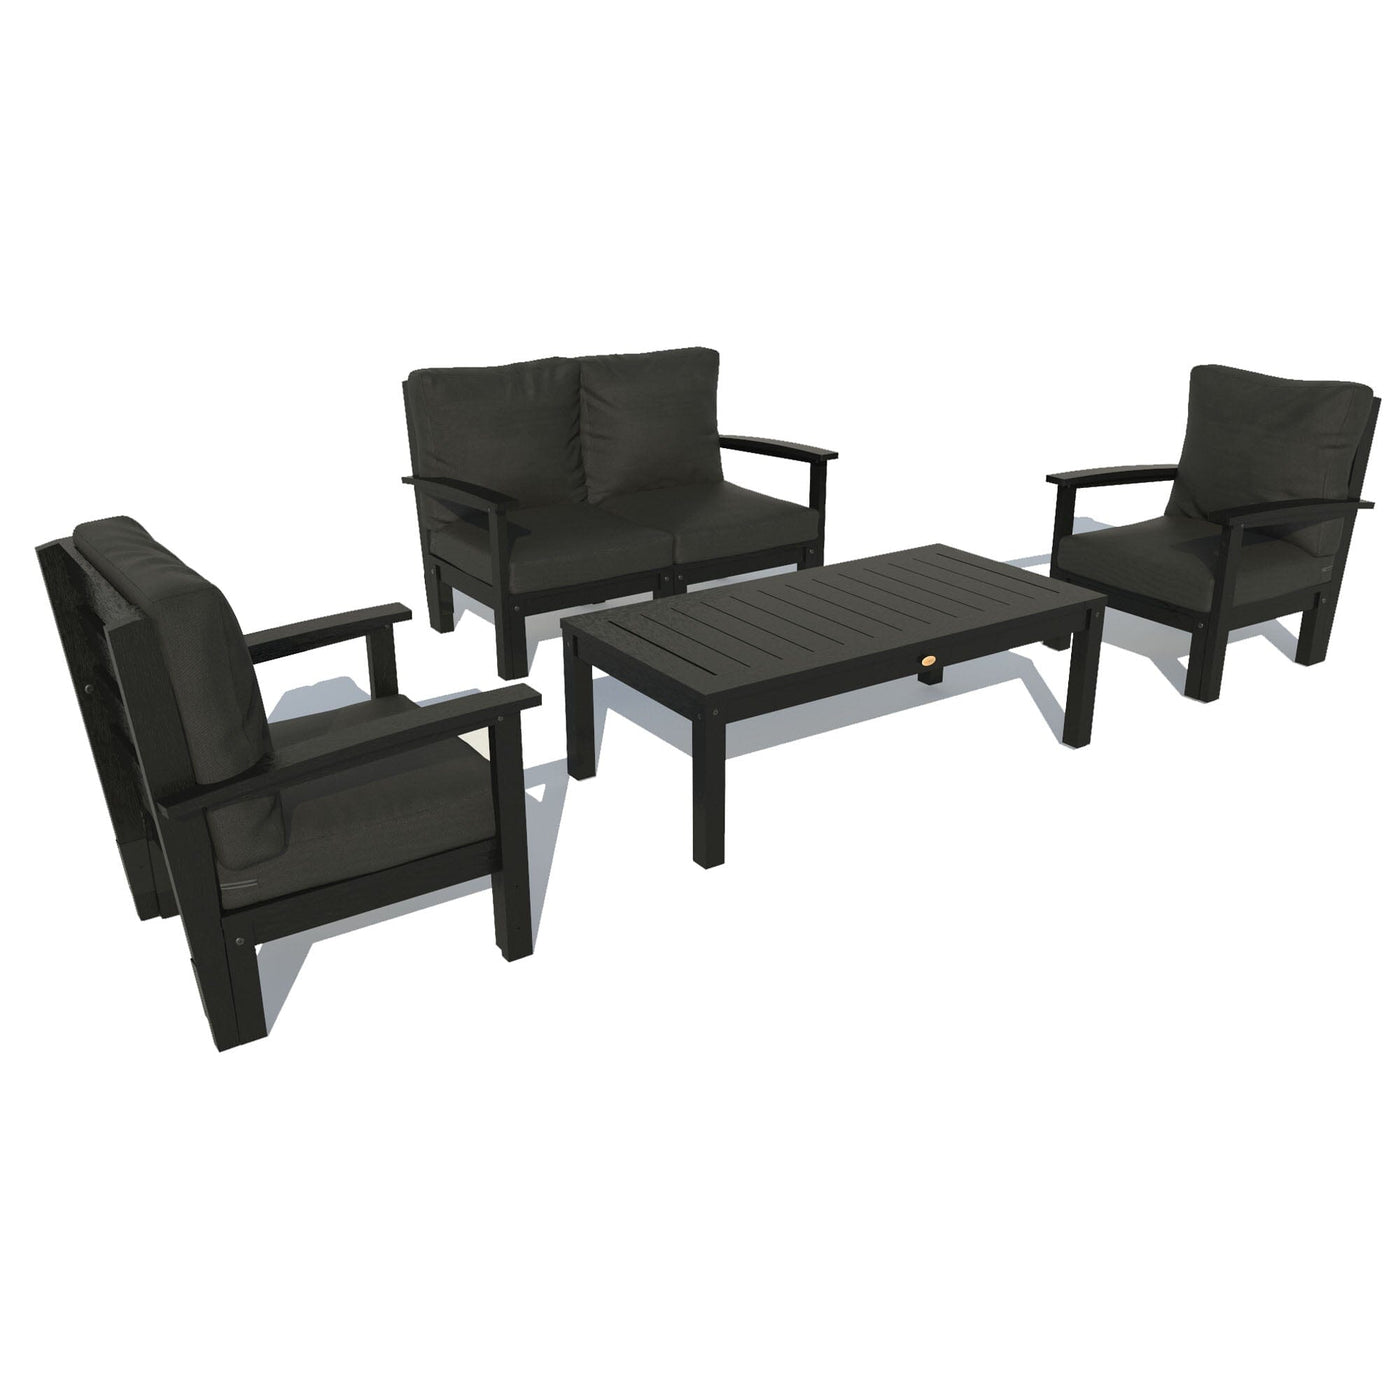 Bespoke Deep Seating: Loveseat, 2 Chair Set, and Conversation Table Deep Seating Highwood USA Jet Black Black 